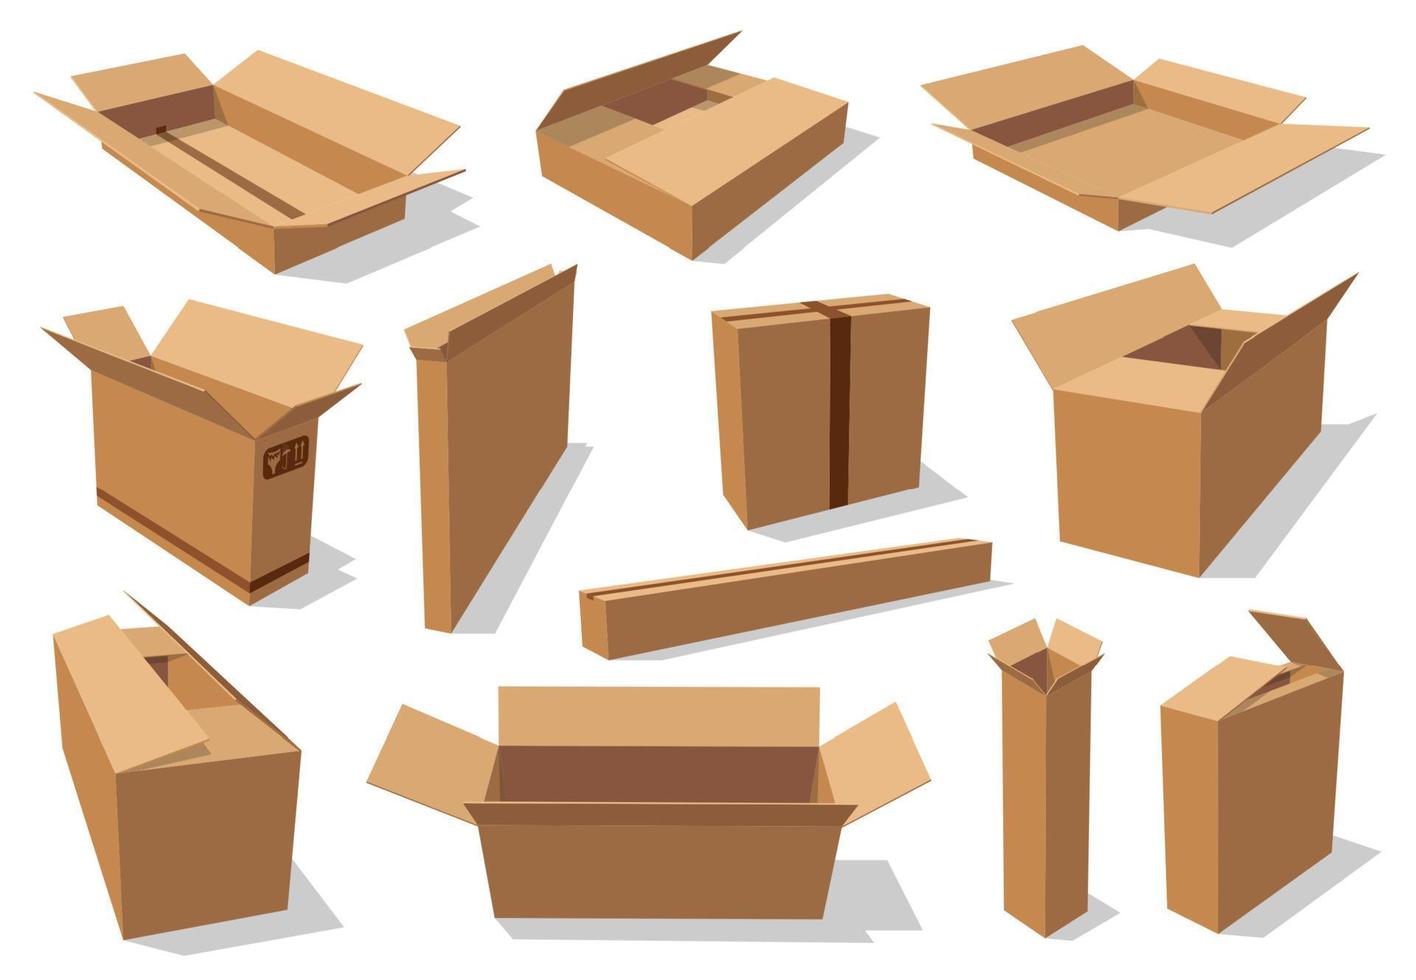 envases de cartón, cajas de cartón vacías vector